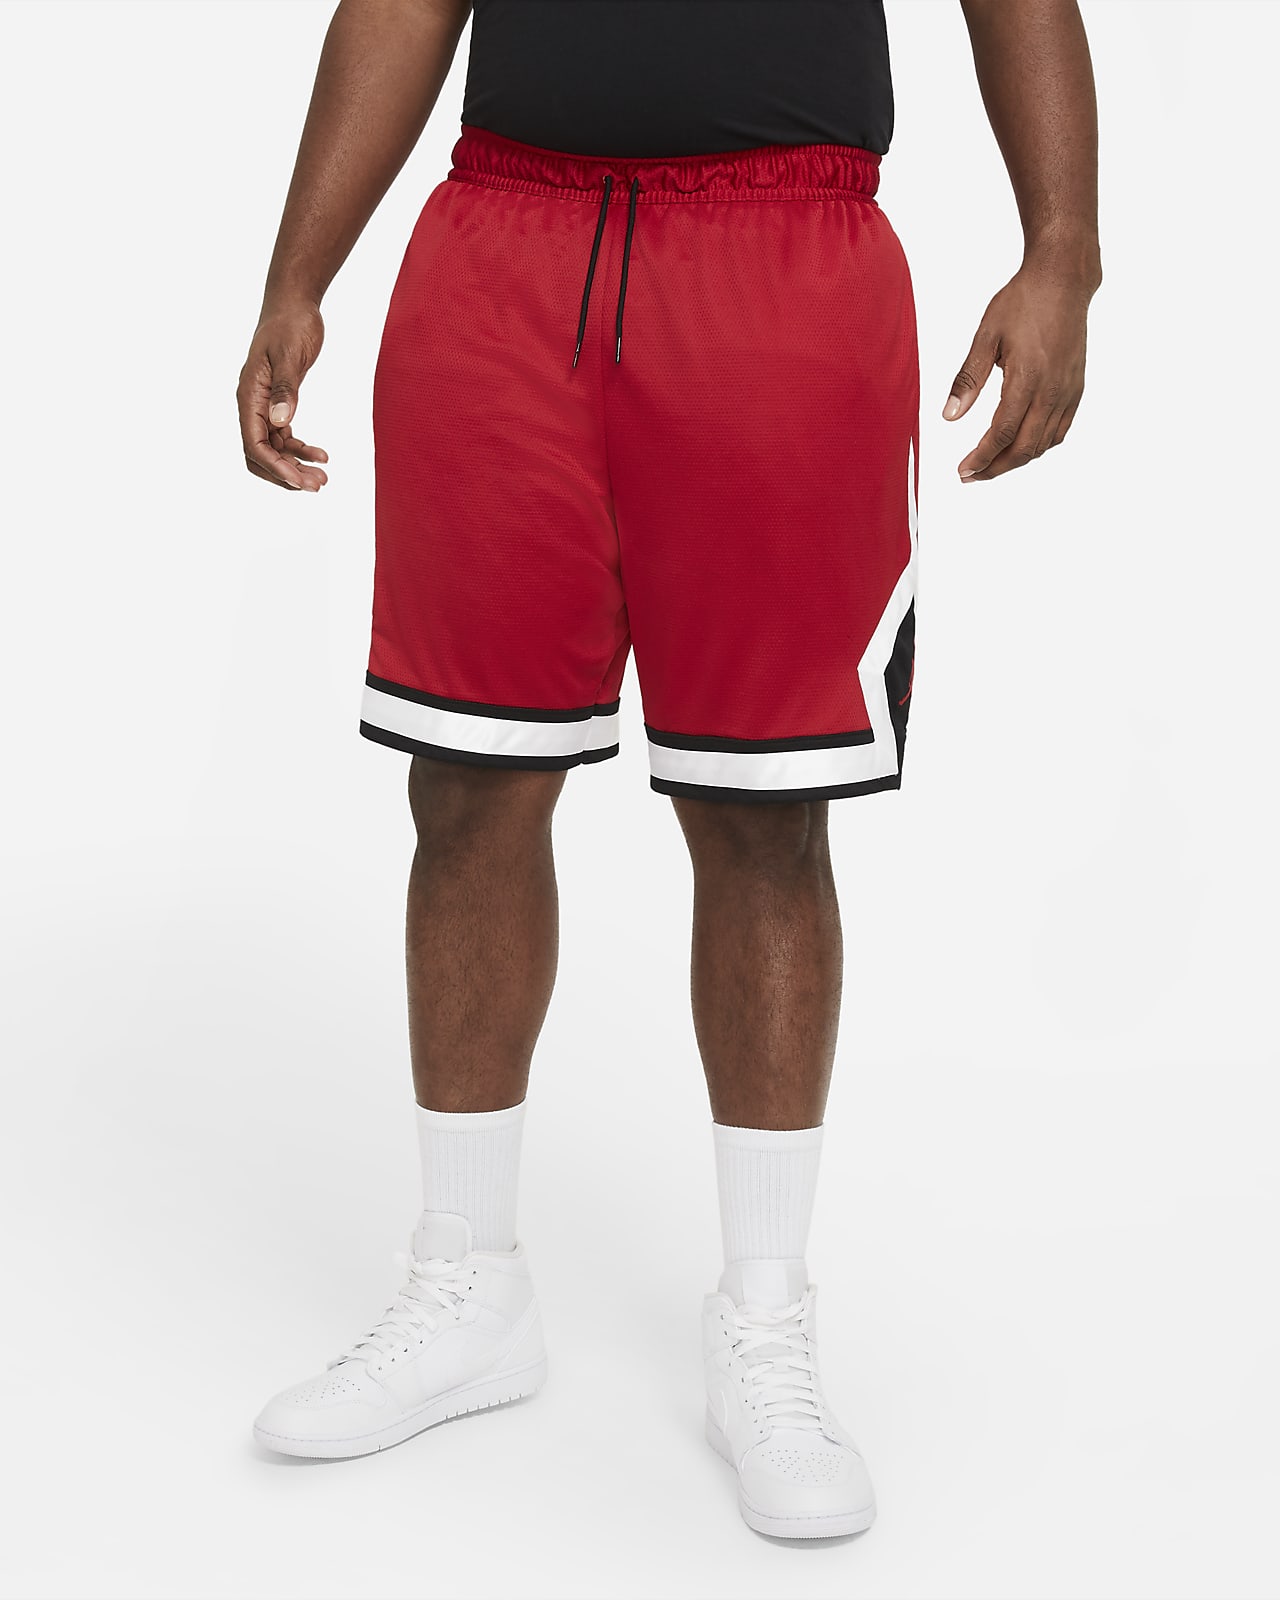 Nike Jumpman Shorts on Sale | bellvalefarms.com